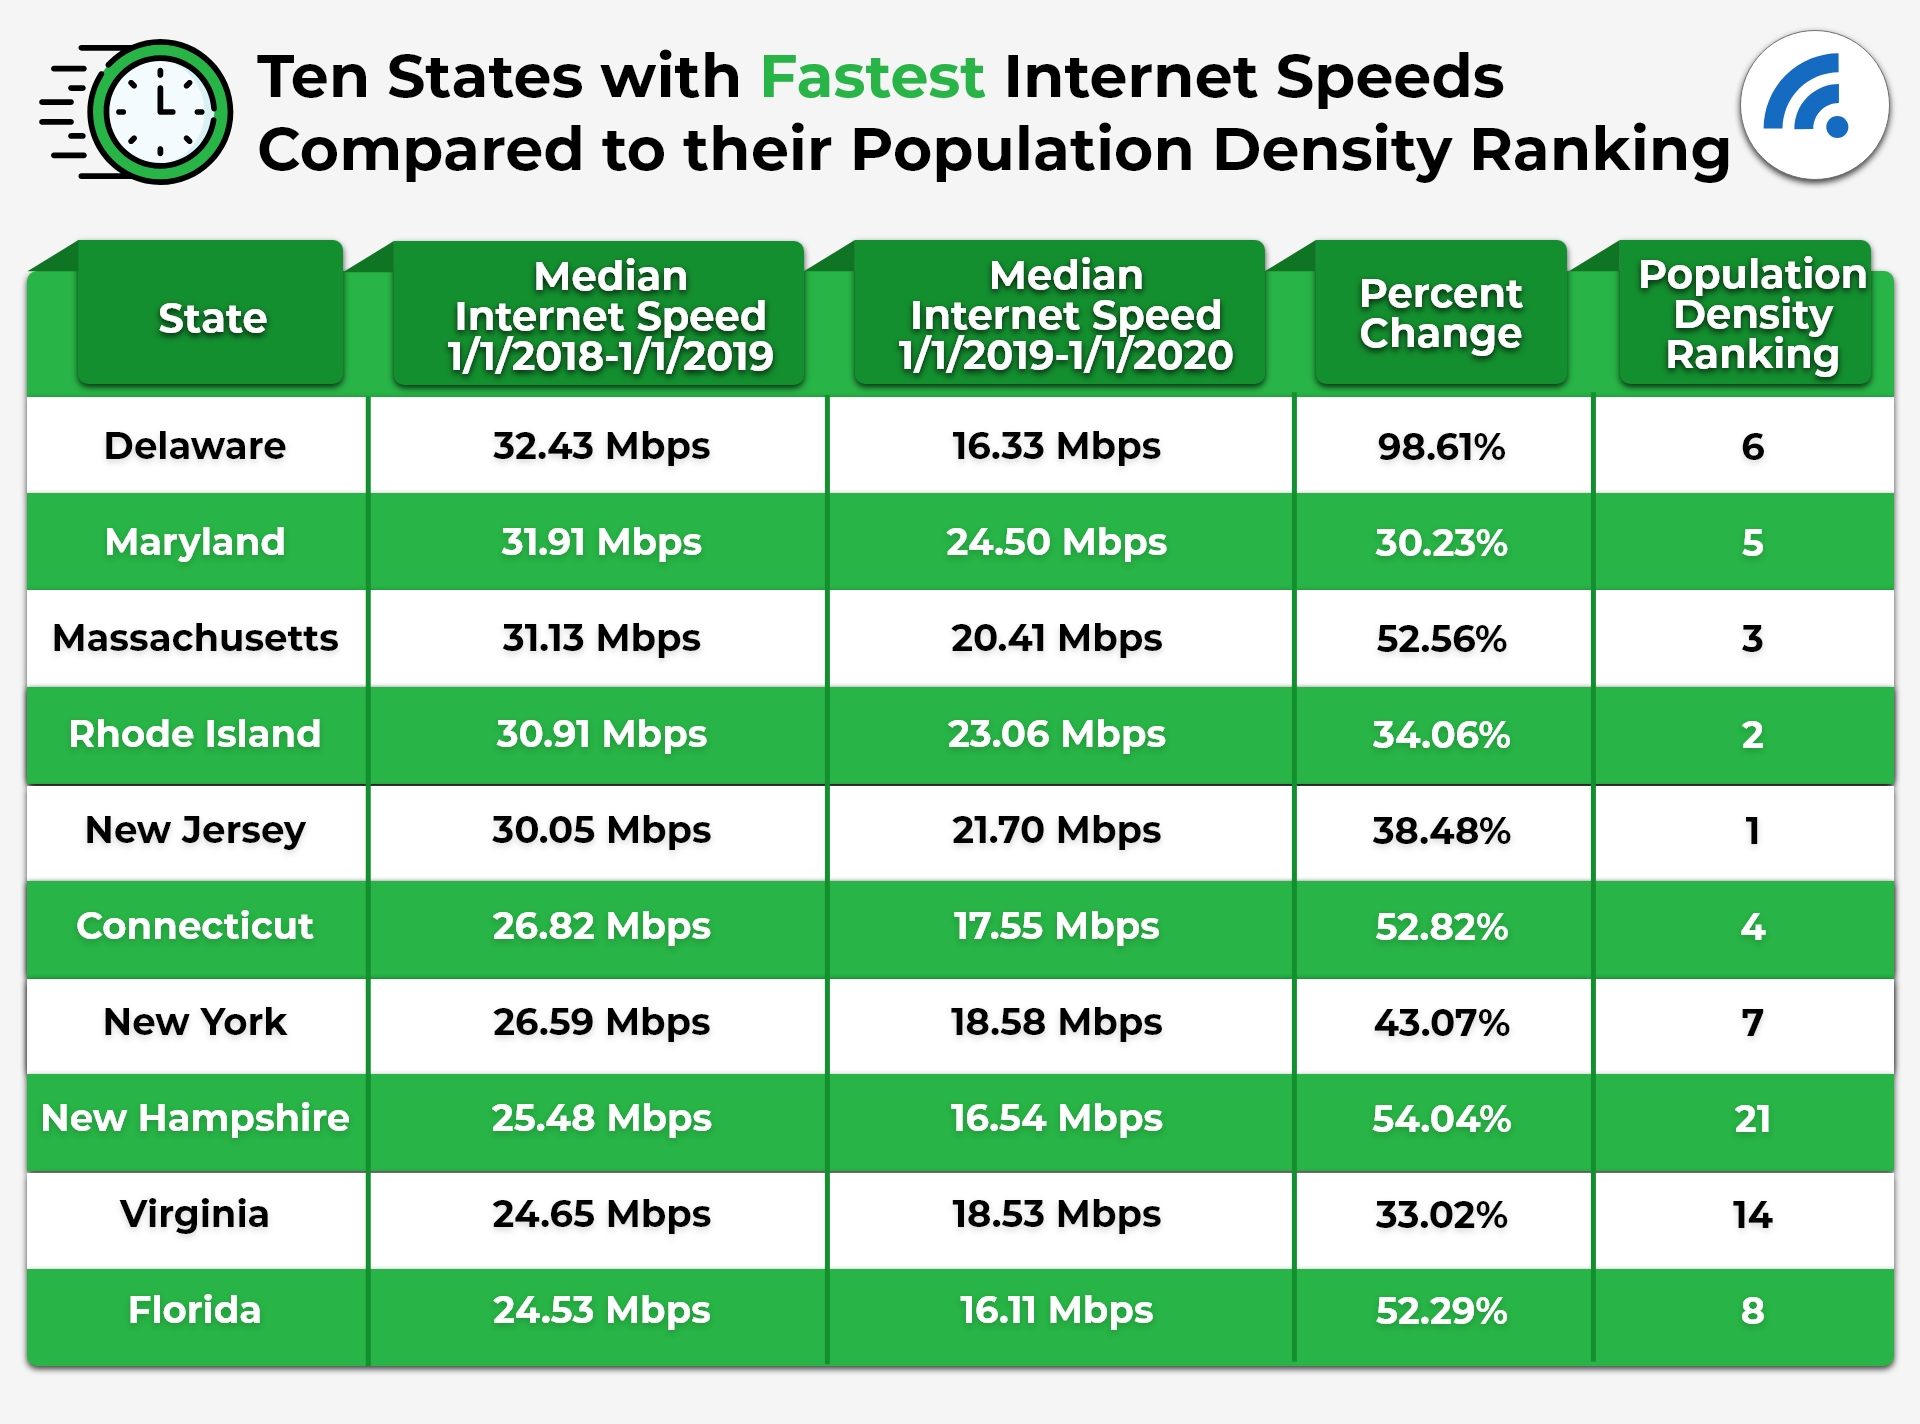 States With Fastest Internet Speeds vs. Population Density